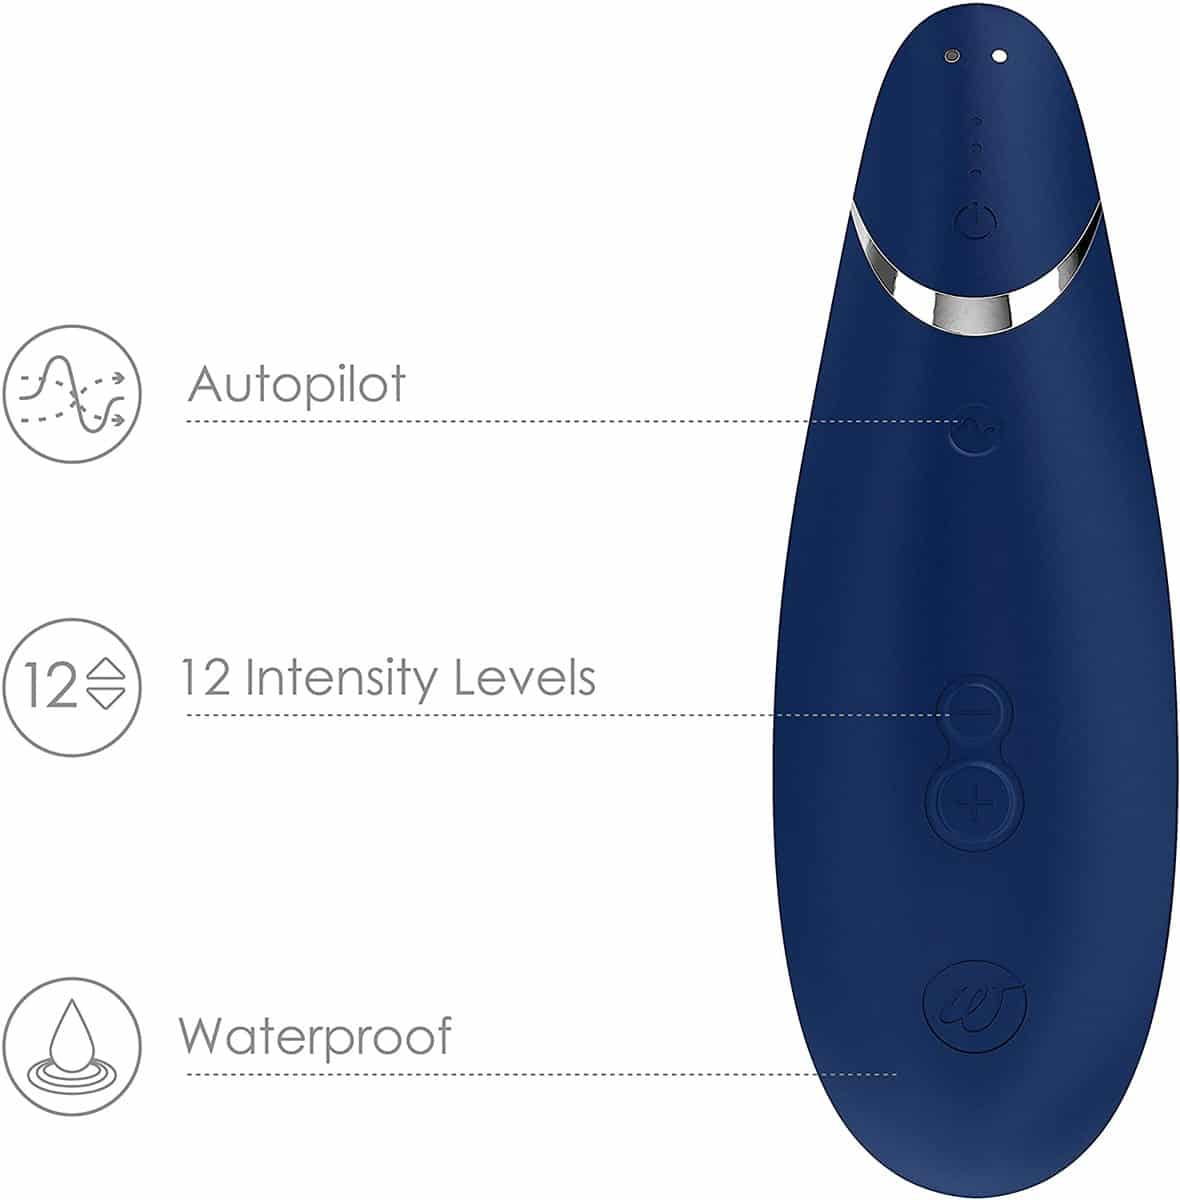 Womanizer Premium Clitoral Suction Vibrator – Blueberry